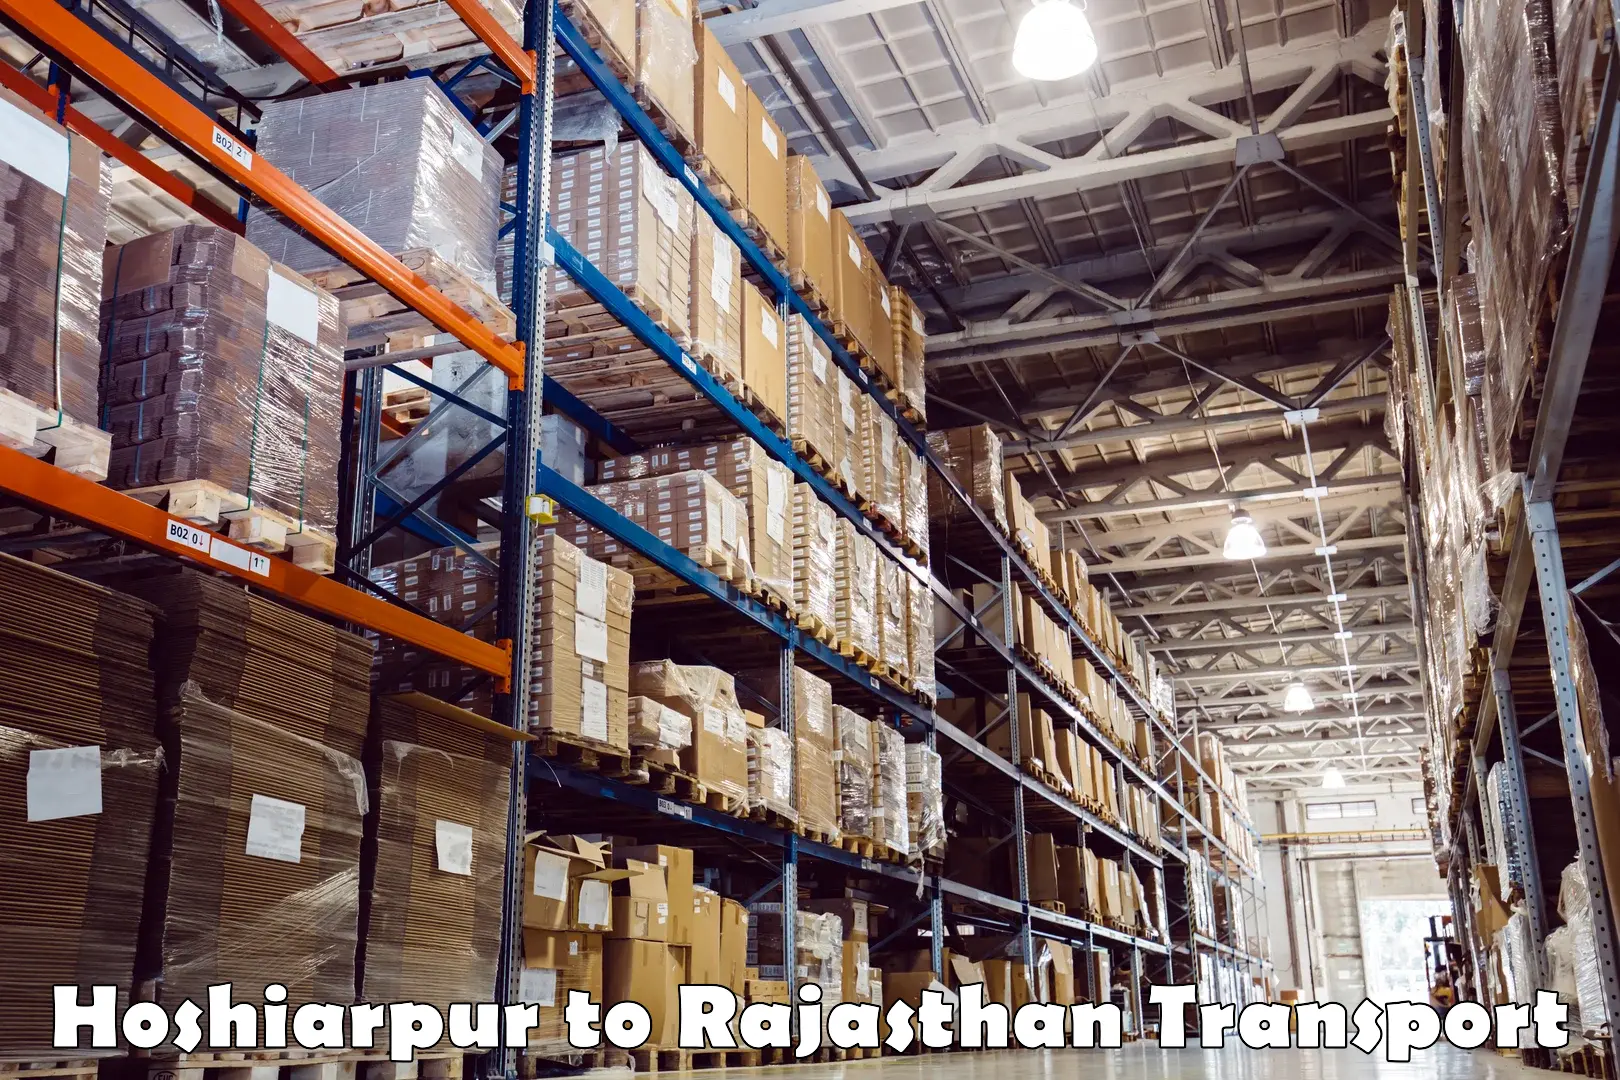 Shipping partner Hoshiarpur to Kalwar